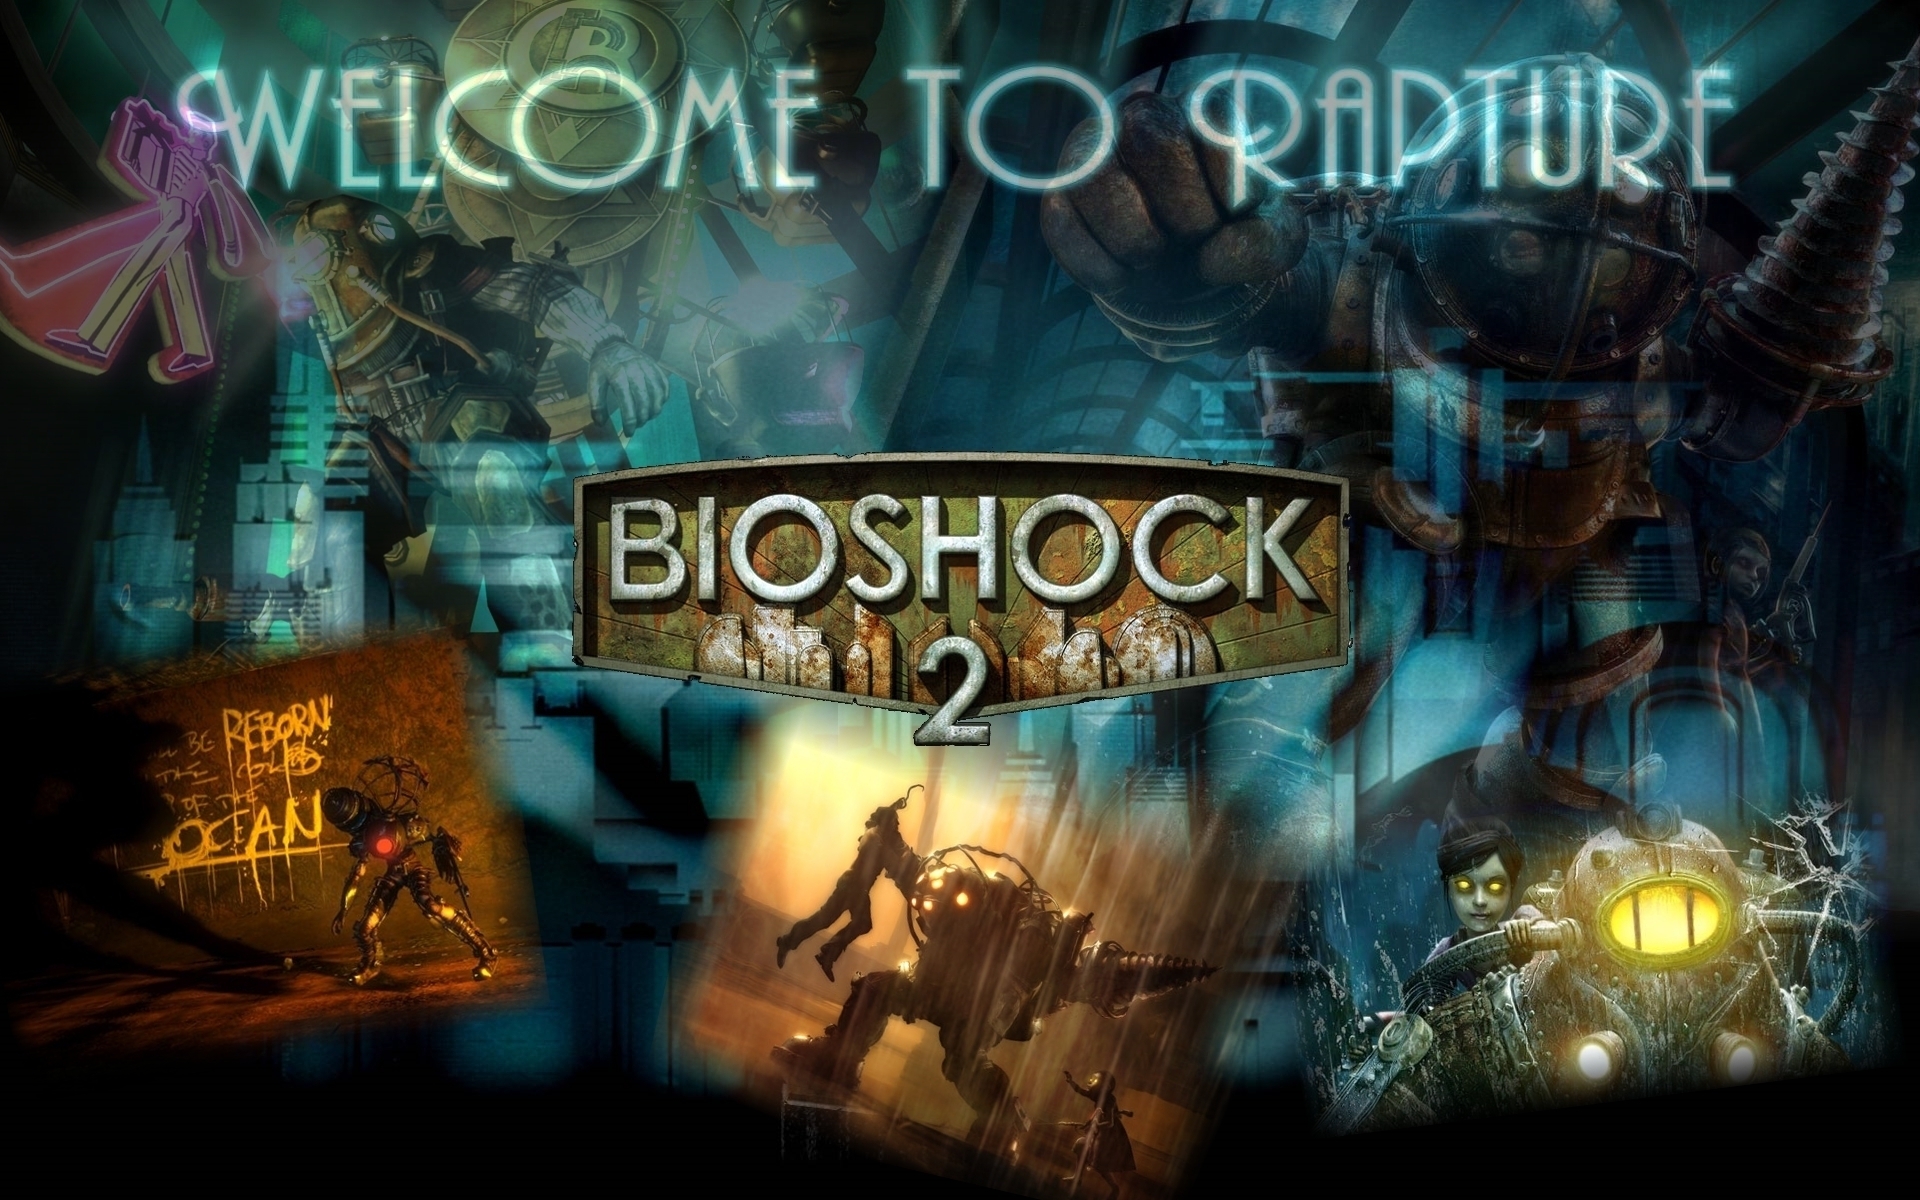 Bioshock 2 for 1920 x 1200 widescreen resolution